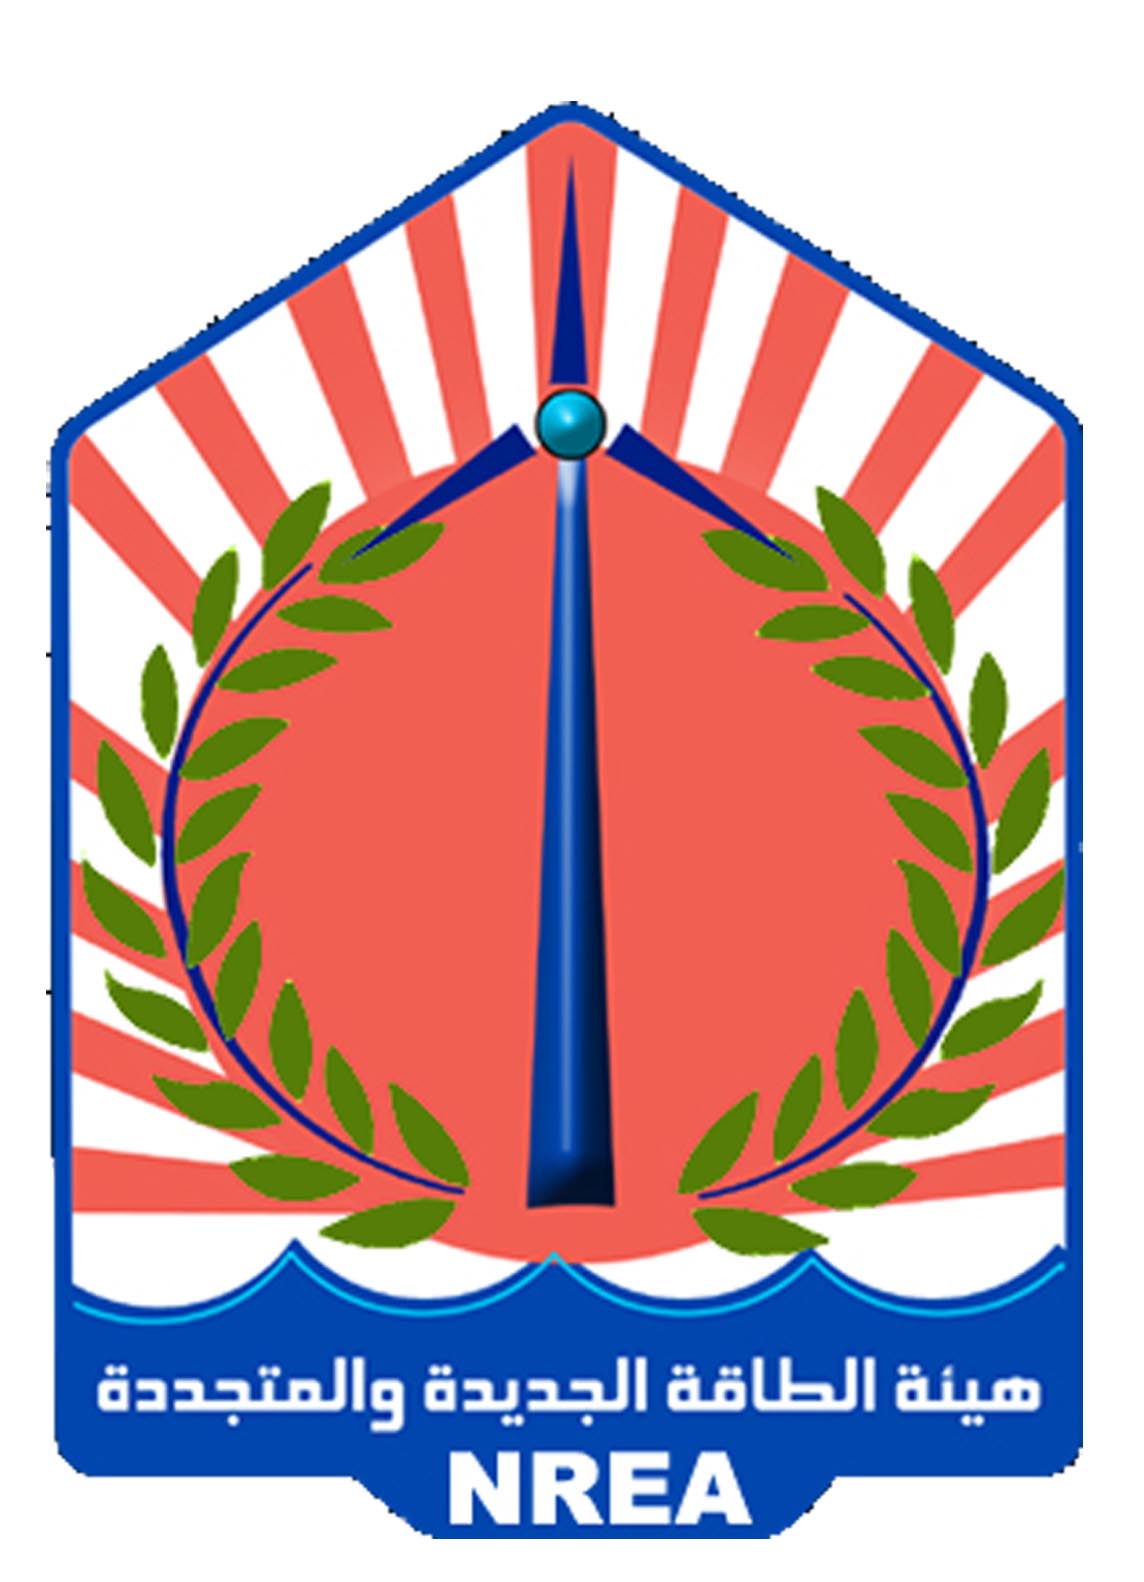 Nrea logo